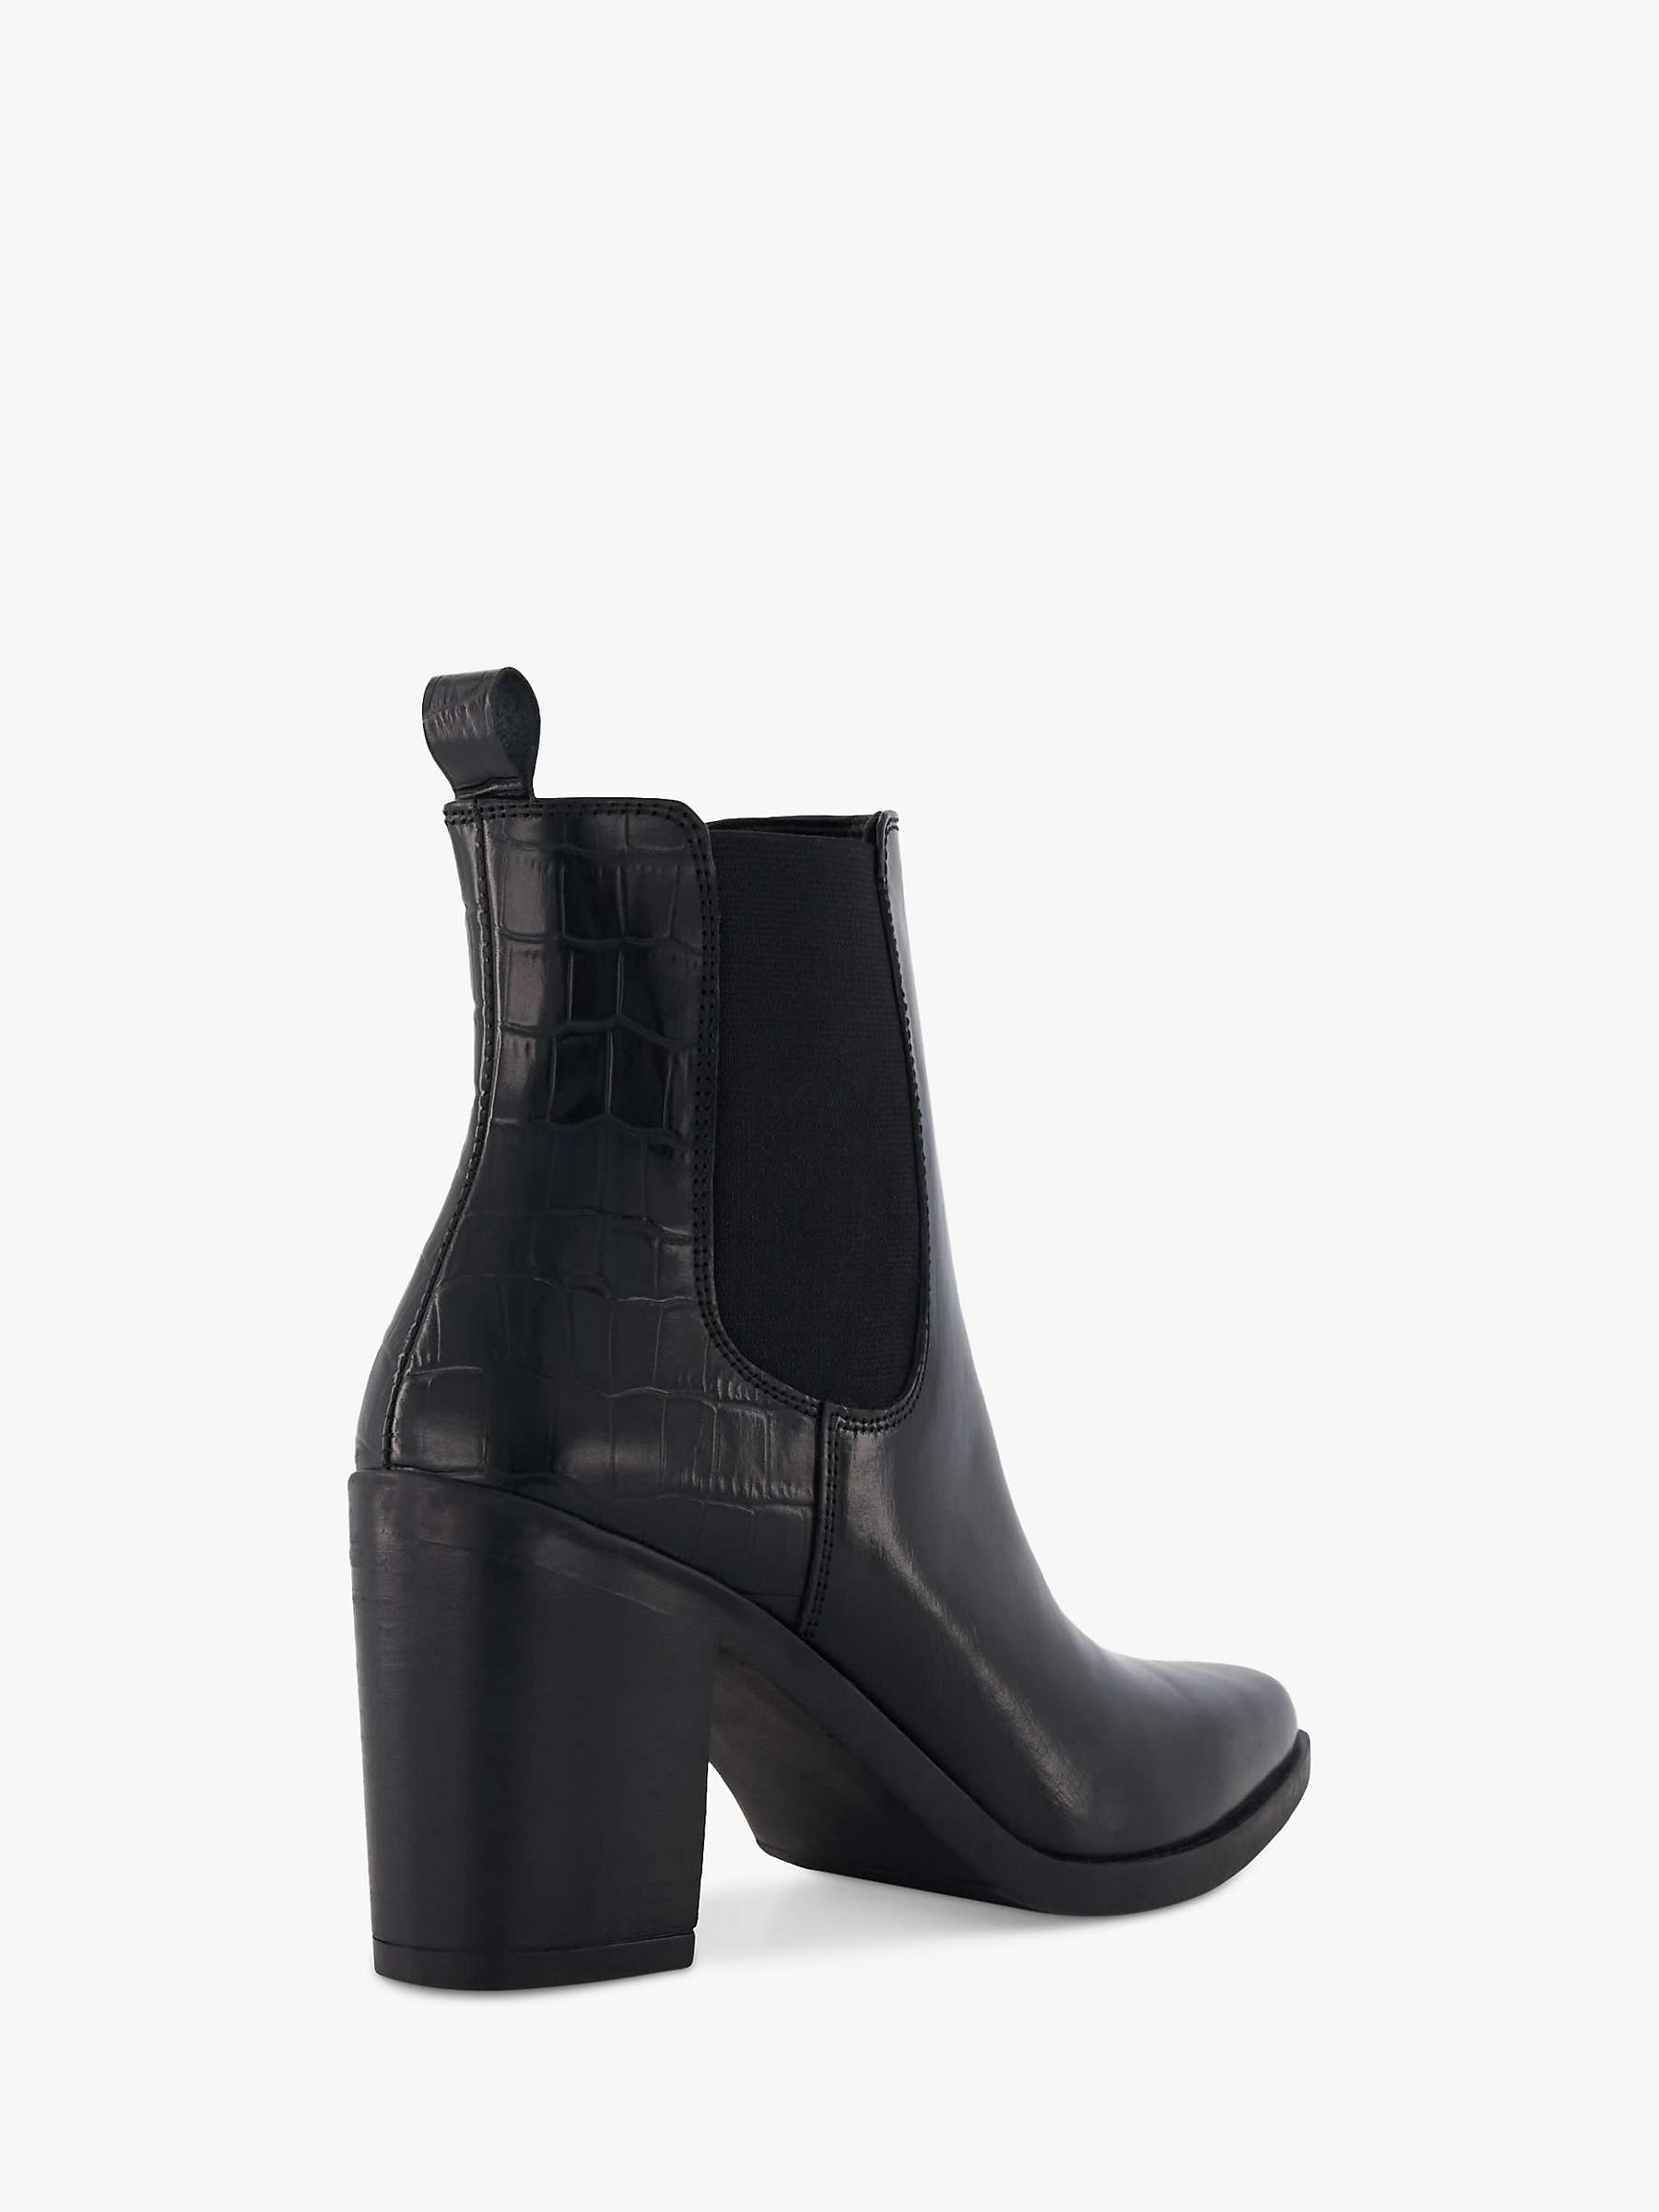 Buy Dune Promising Block Heel Leather Ankle Boots, Black Online at johnlewis.com